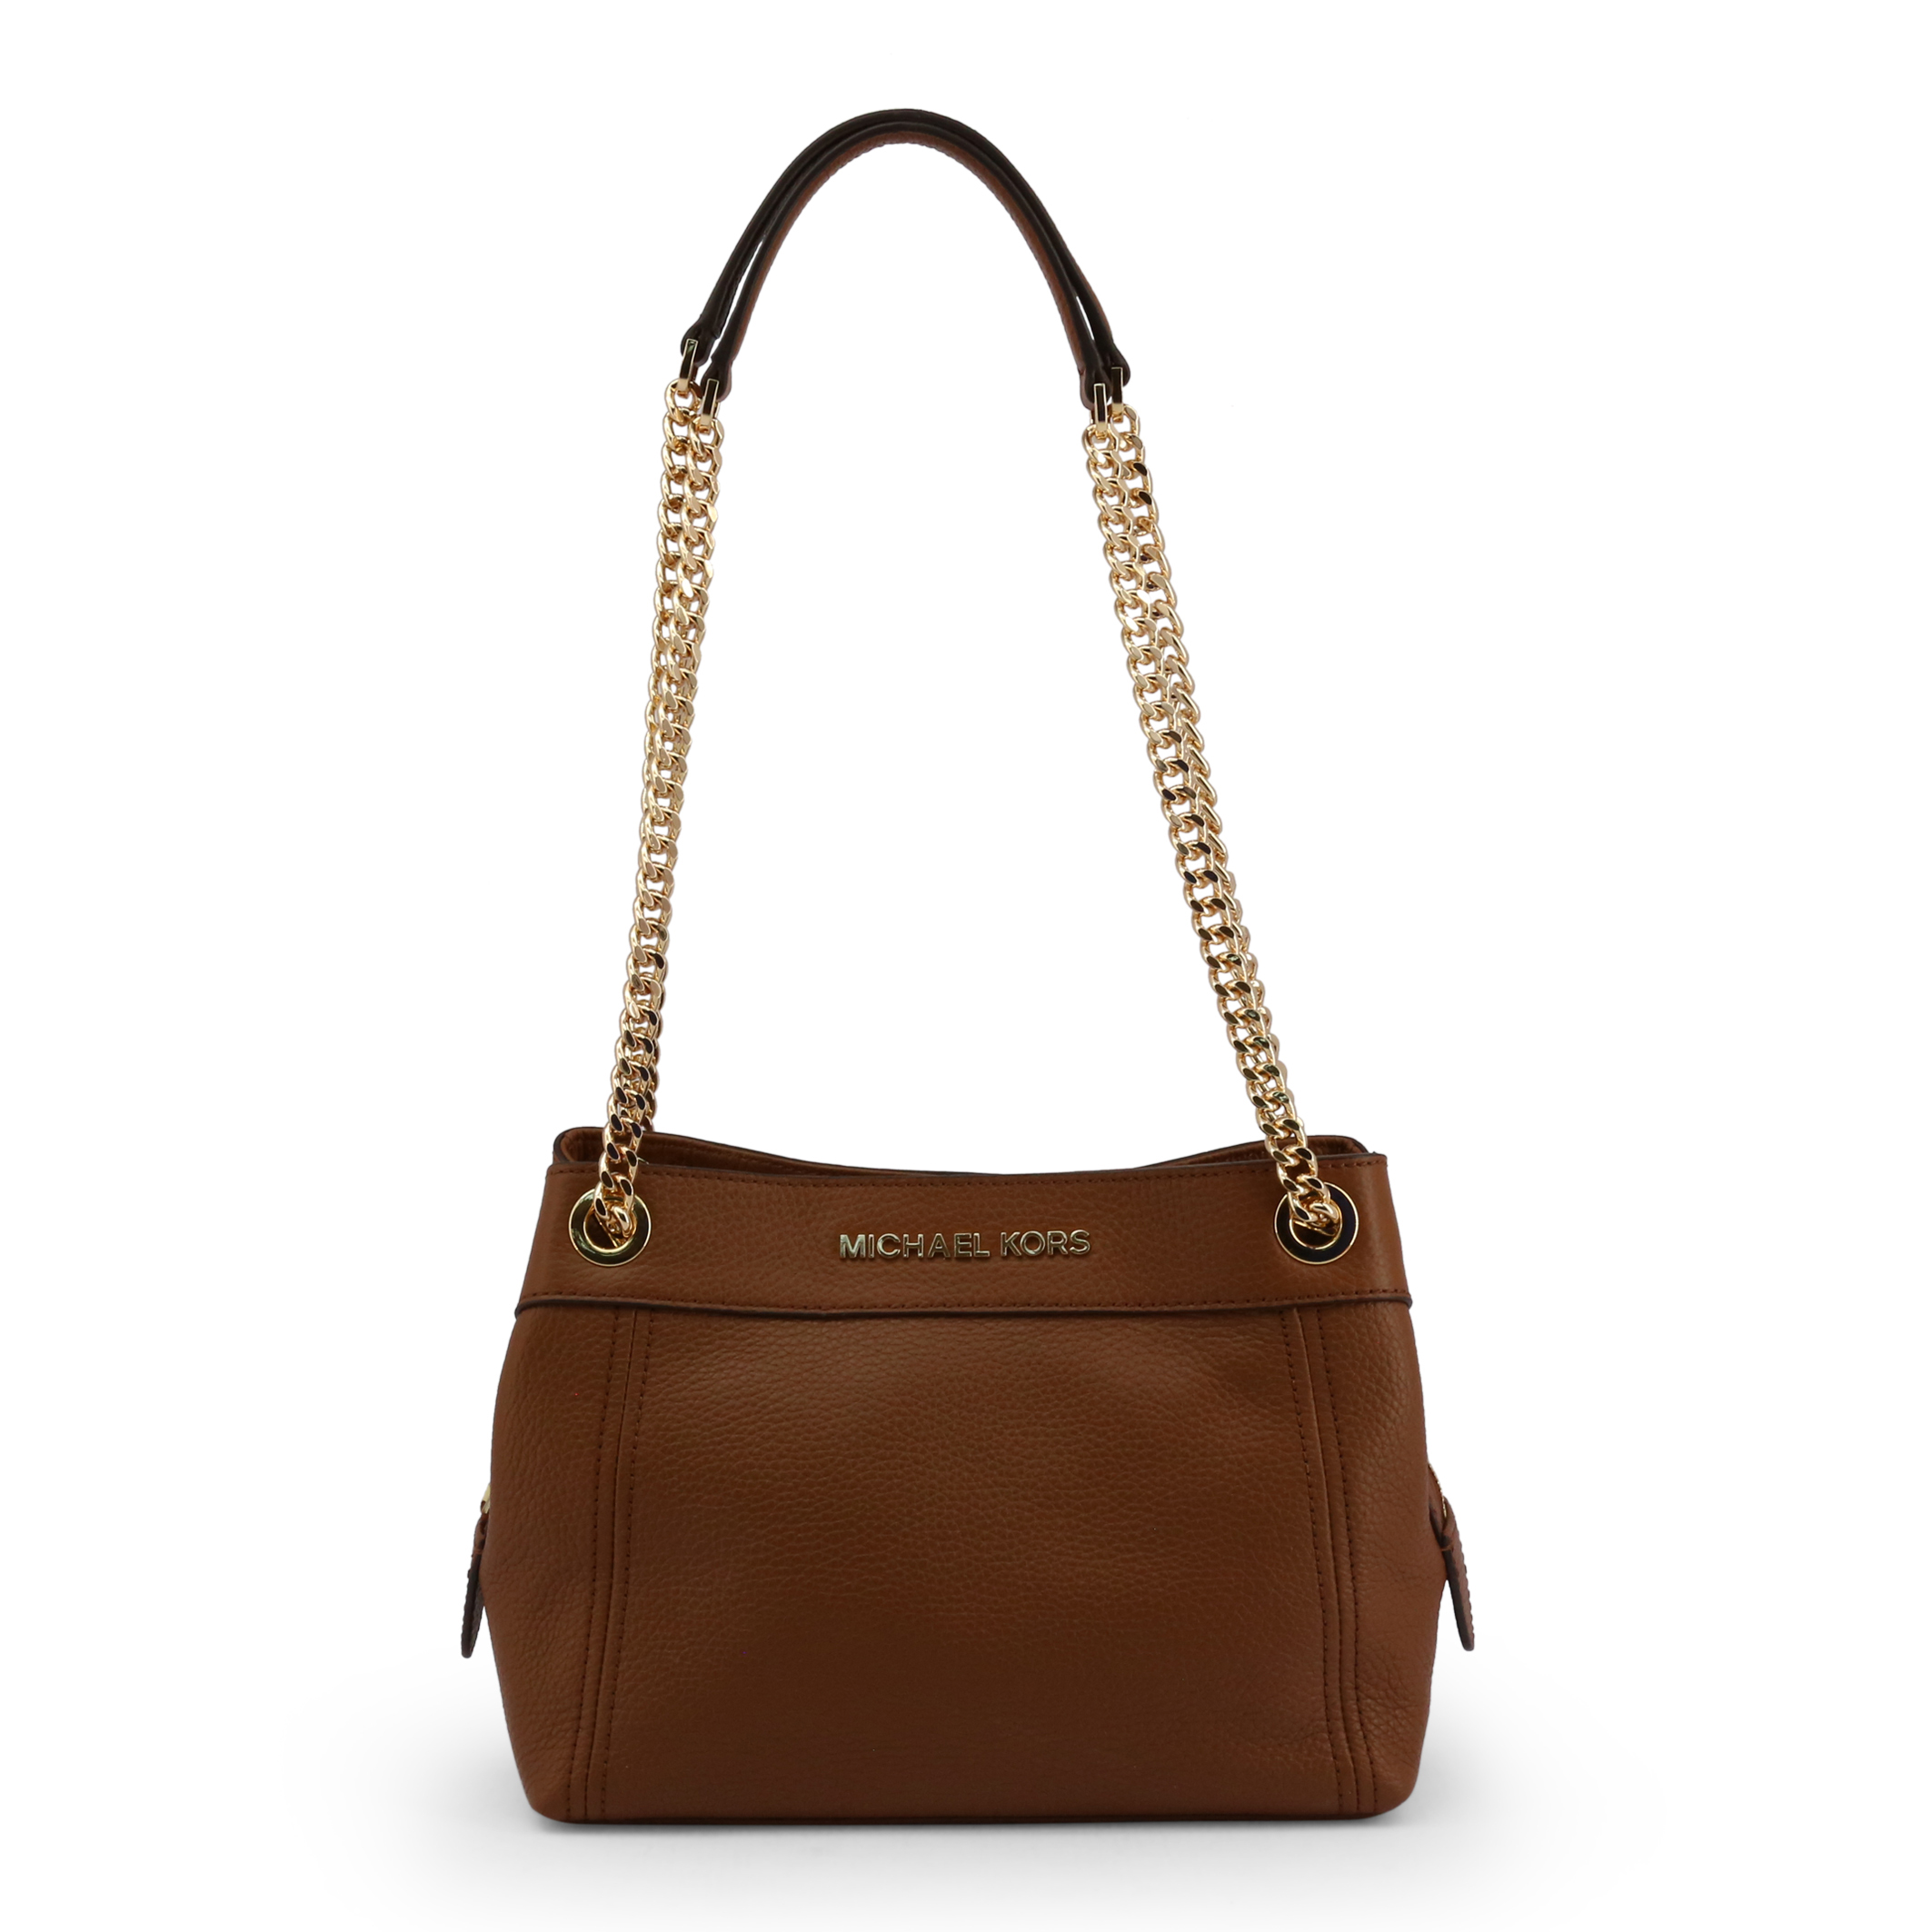 Luxury fashion  independent designers  SSENSE  Michael kors handbags  outlet Leather satchel bag Best handbags